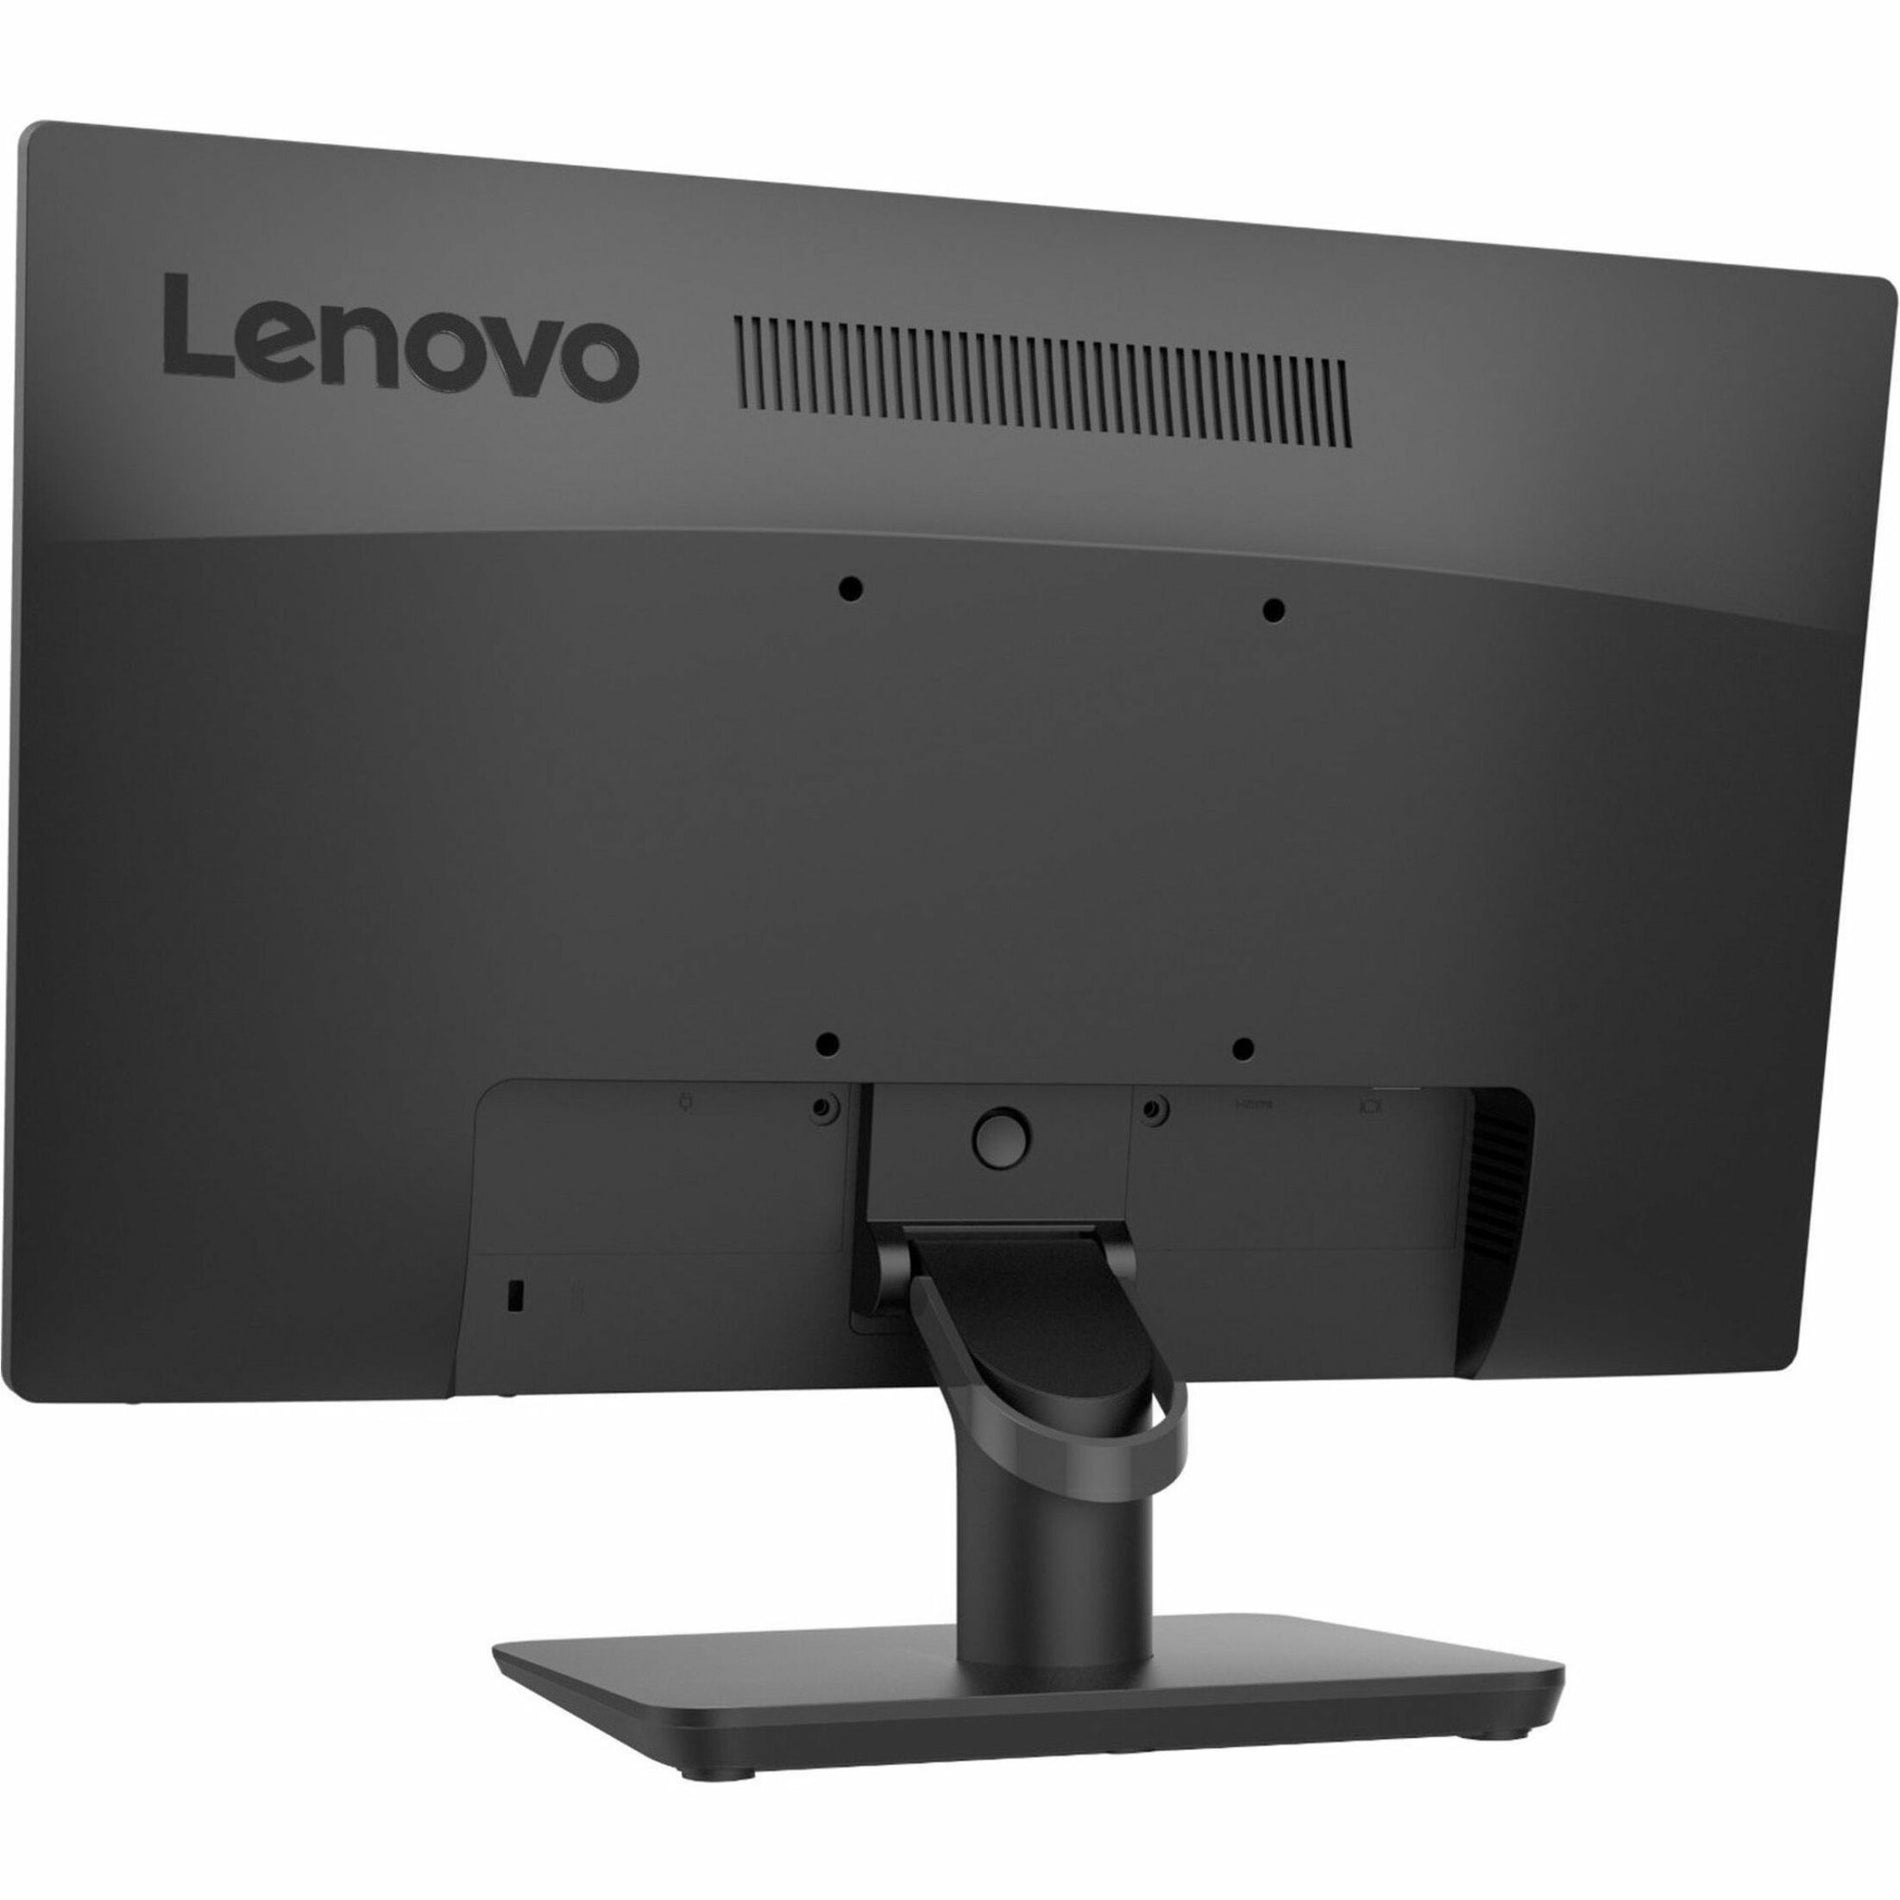 Lenovo 61E0KAR6US D19-10 Widescreen LCD Monitor, 18.5" WXGA, 16:9, 200 Nit, Black